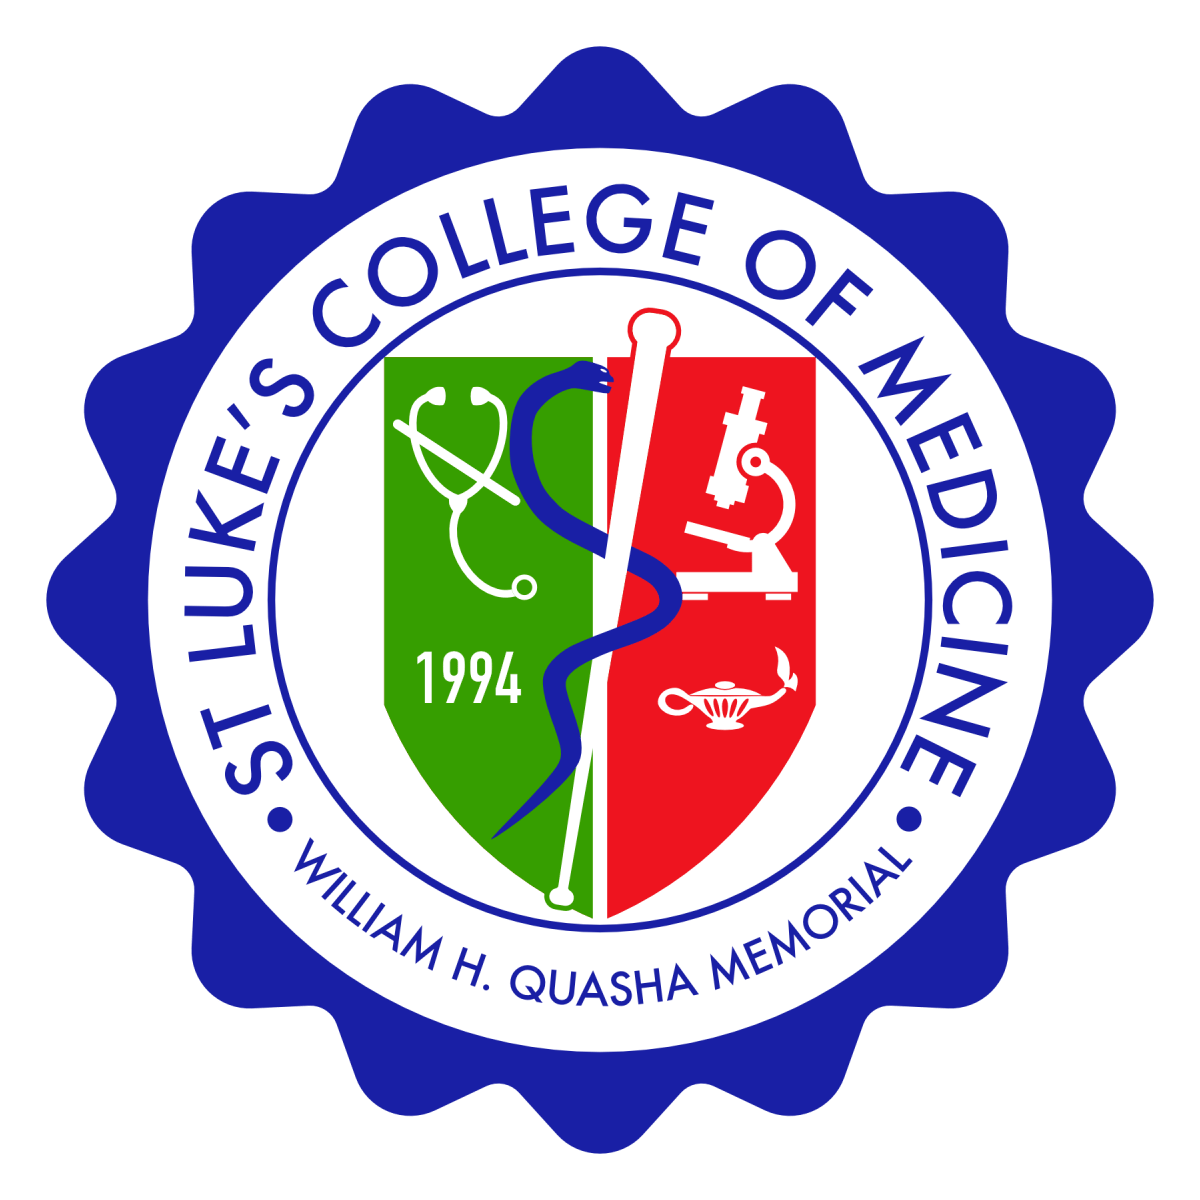 St lukes college of medicine